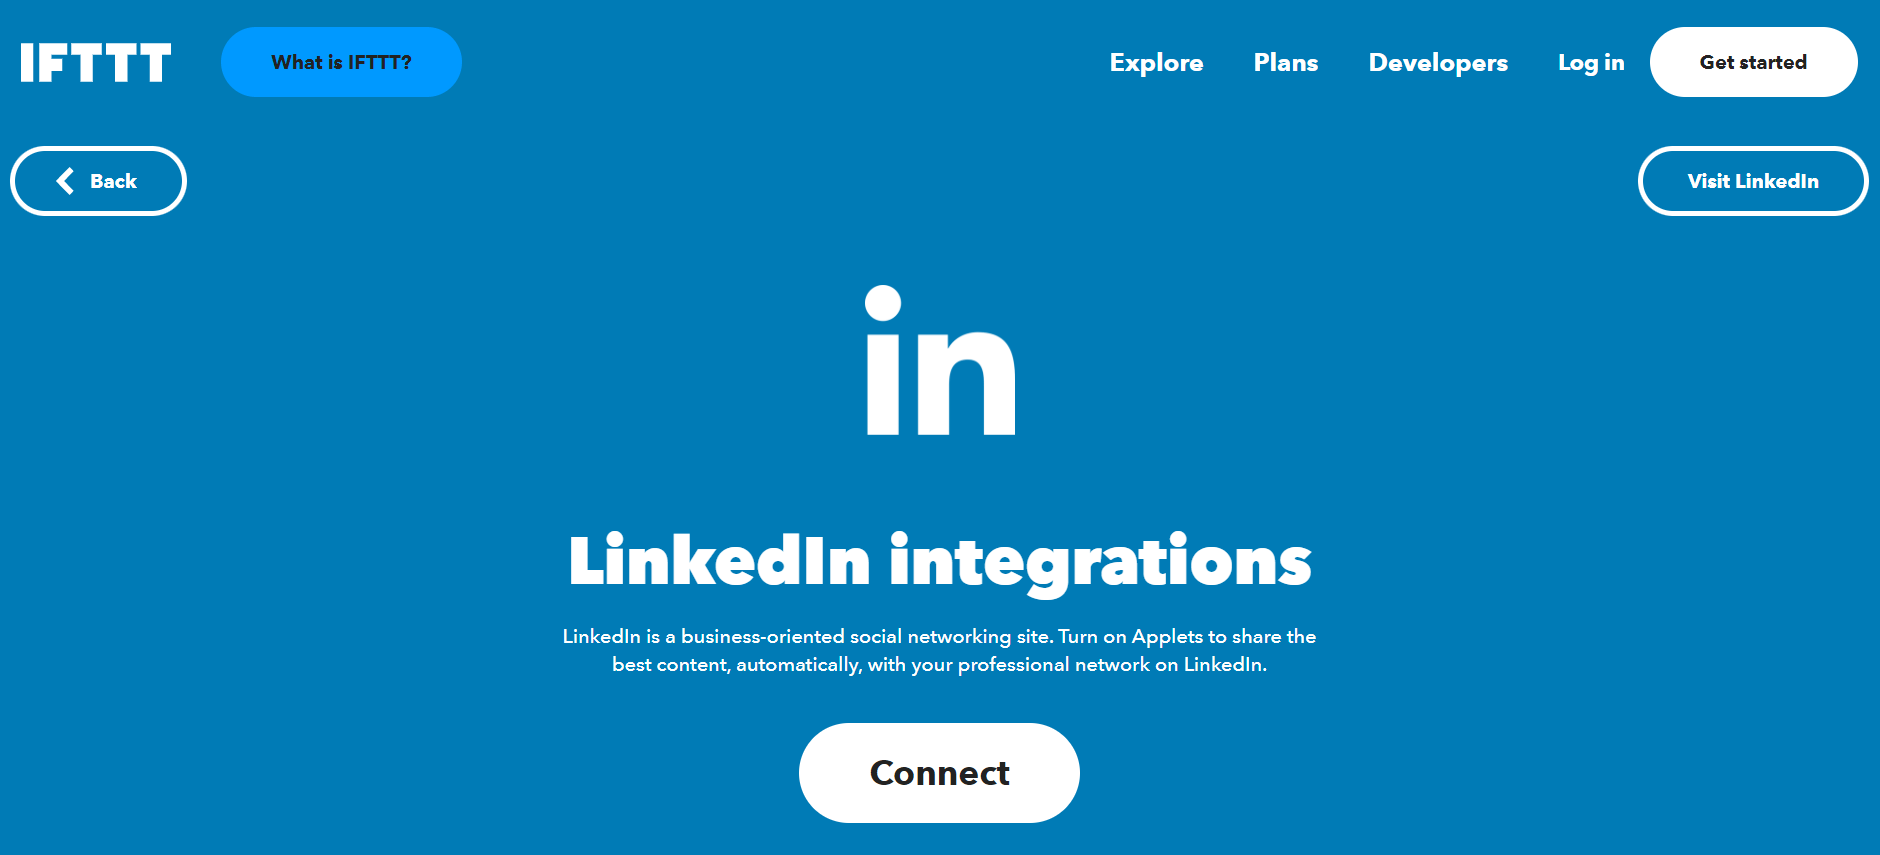 IFTTT，“如果这样，那么那样” - LinkedIn 工具